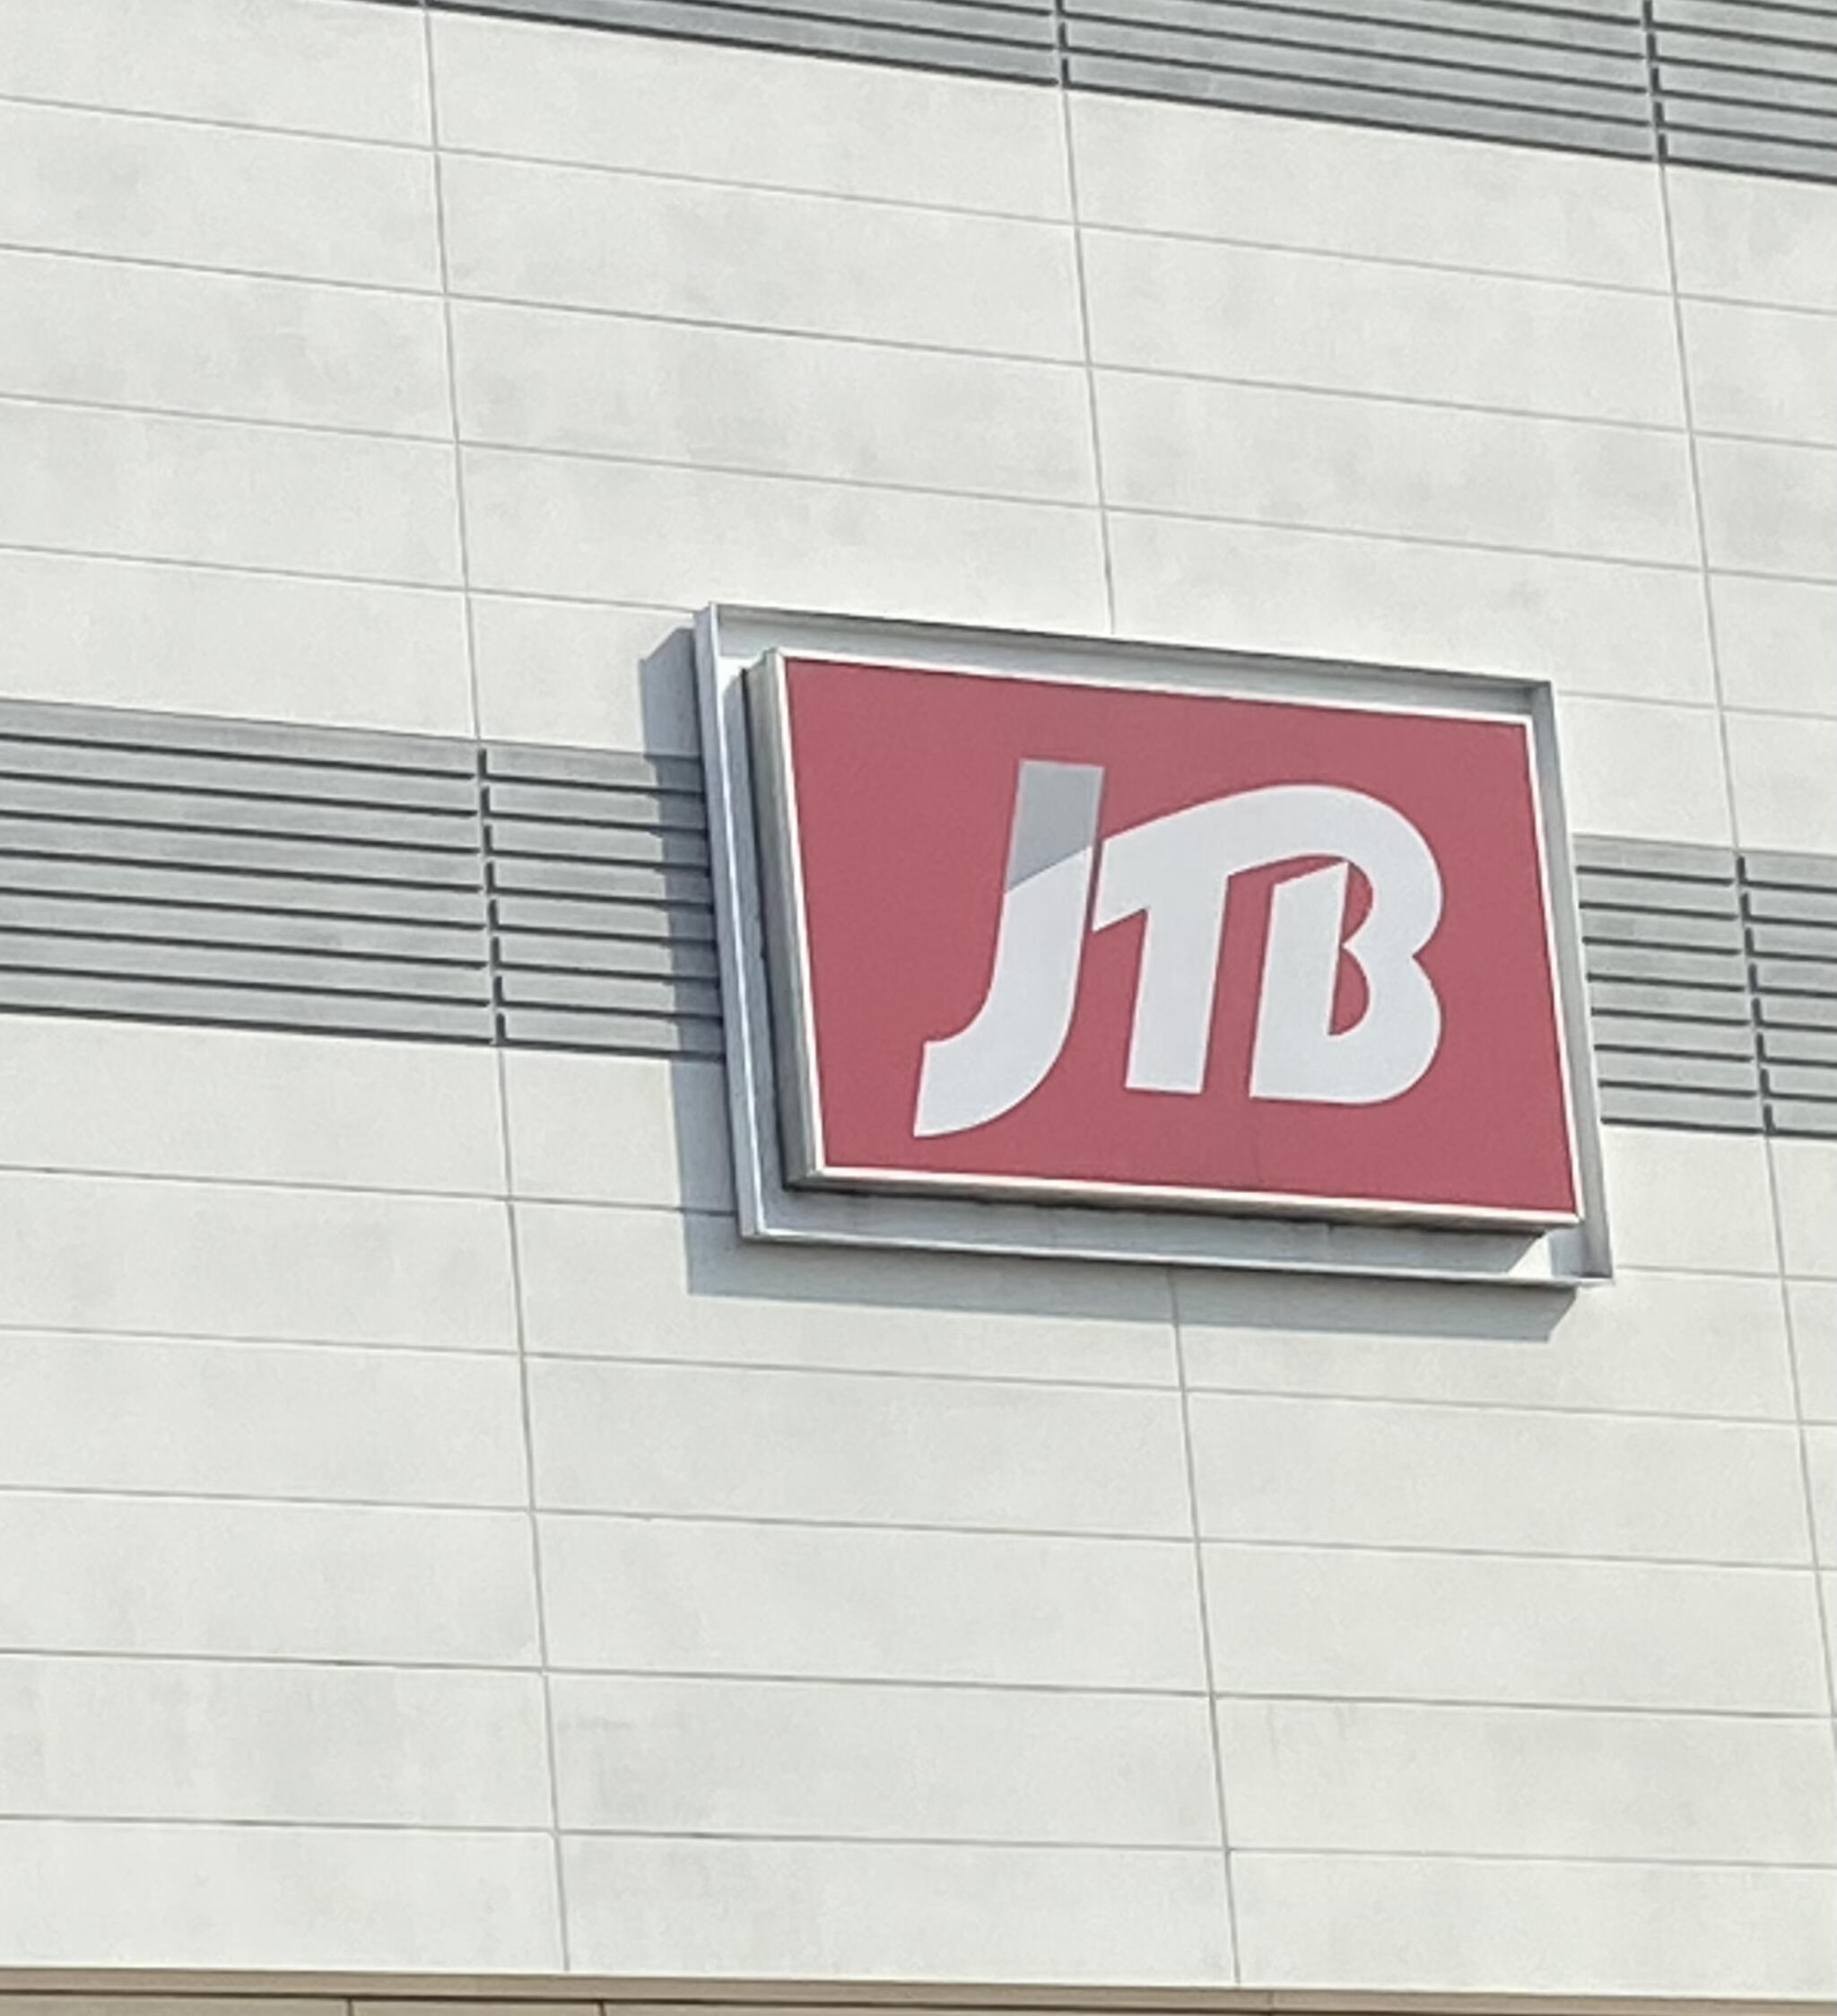 JTB 丸亀ゆめタウン店の代表写真2